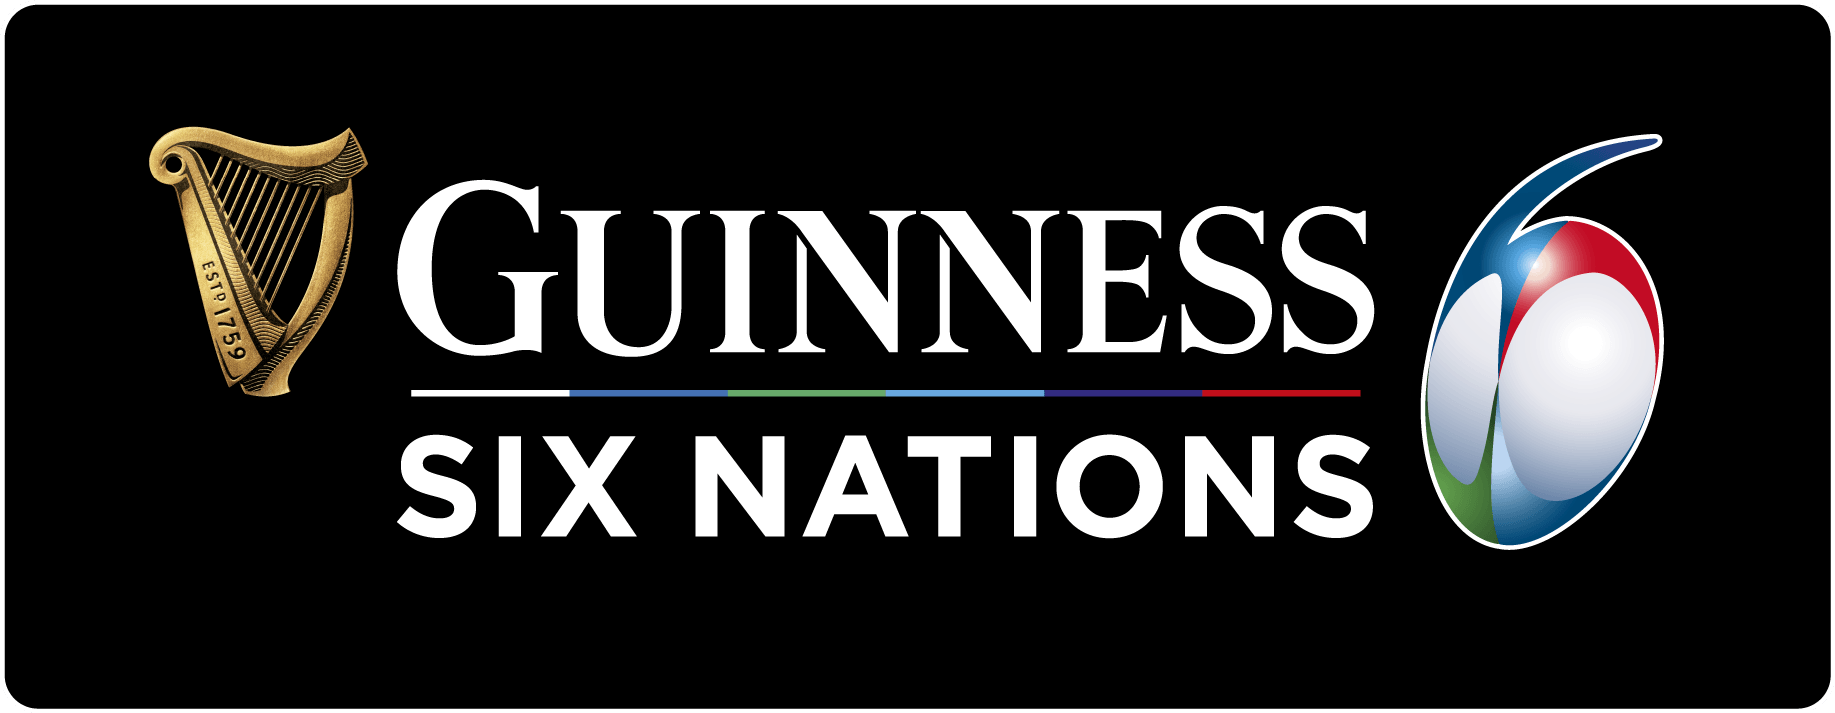 Guinness Font Logo - Six Nations Fixtures